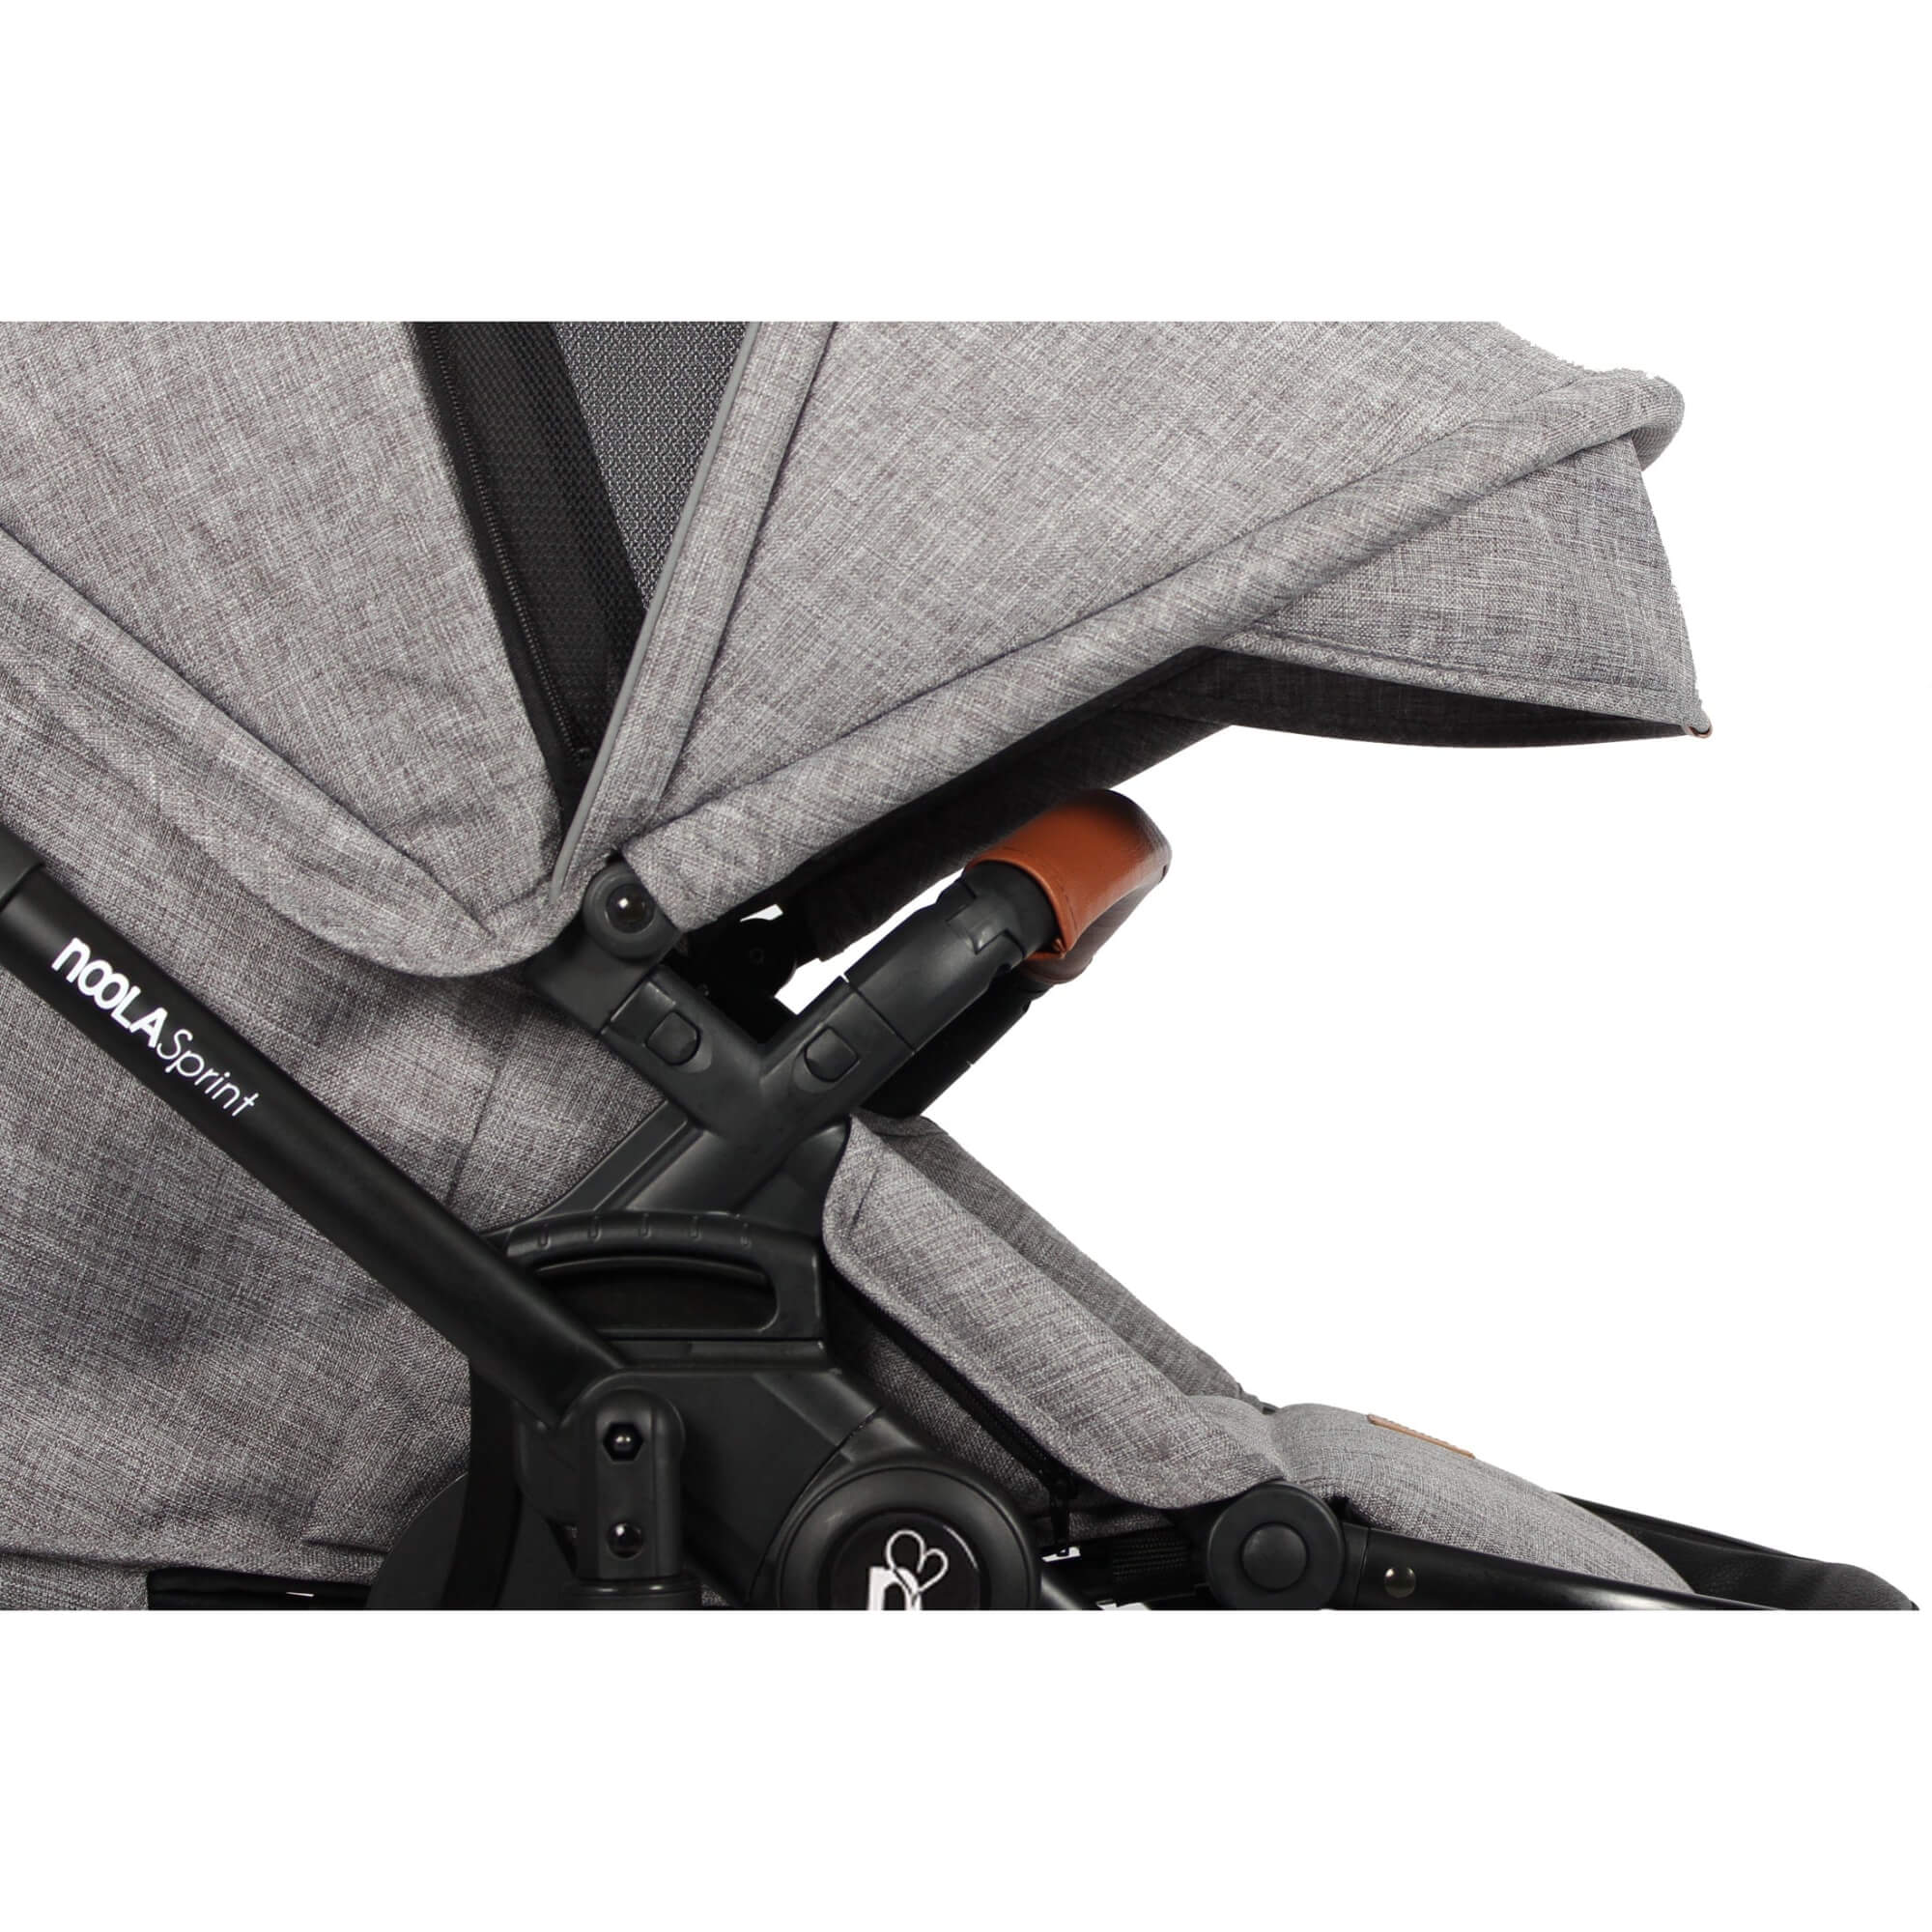 noola sprint 4in1 travel system with isofix lunar grey baby stroller